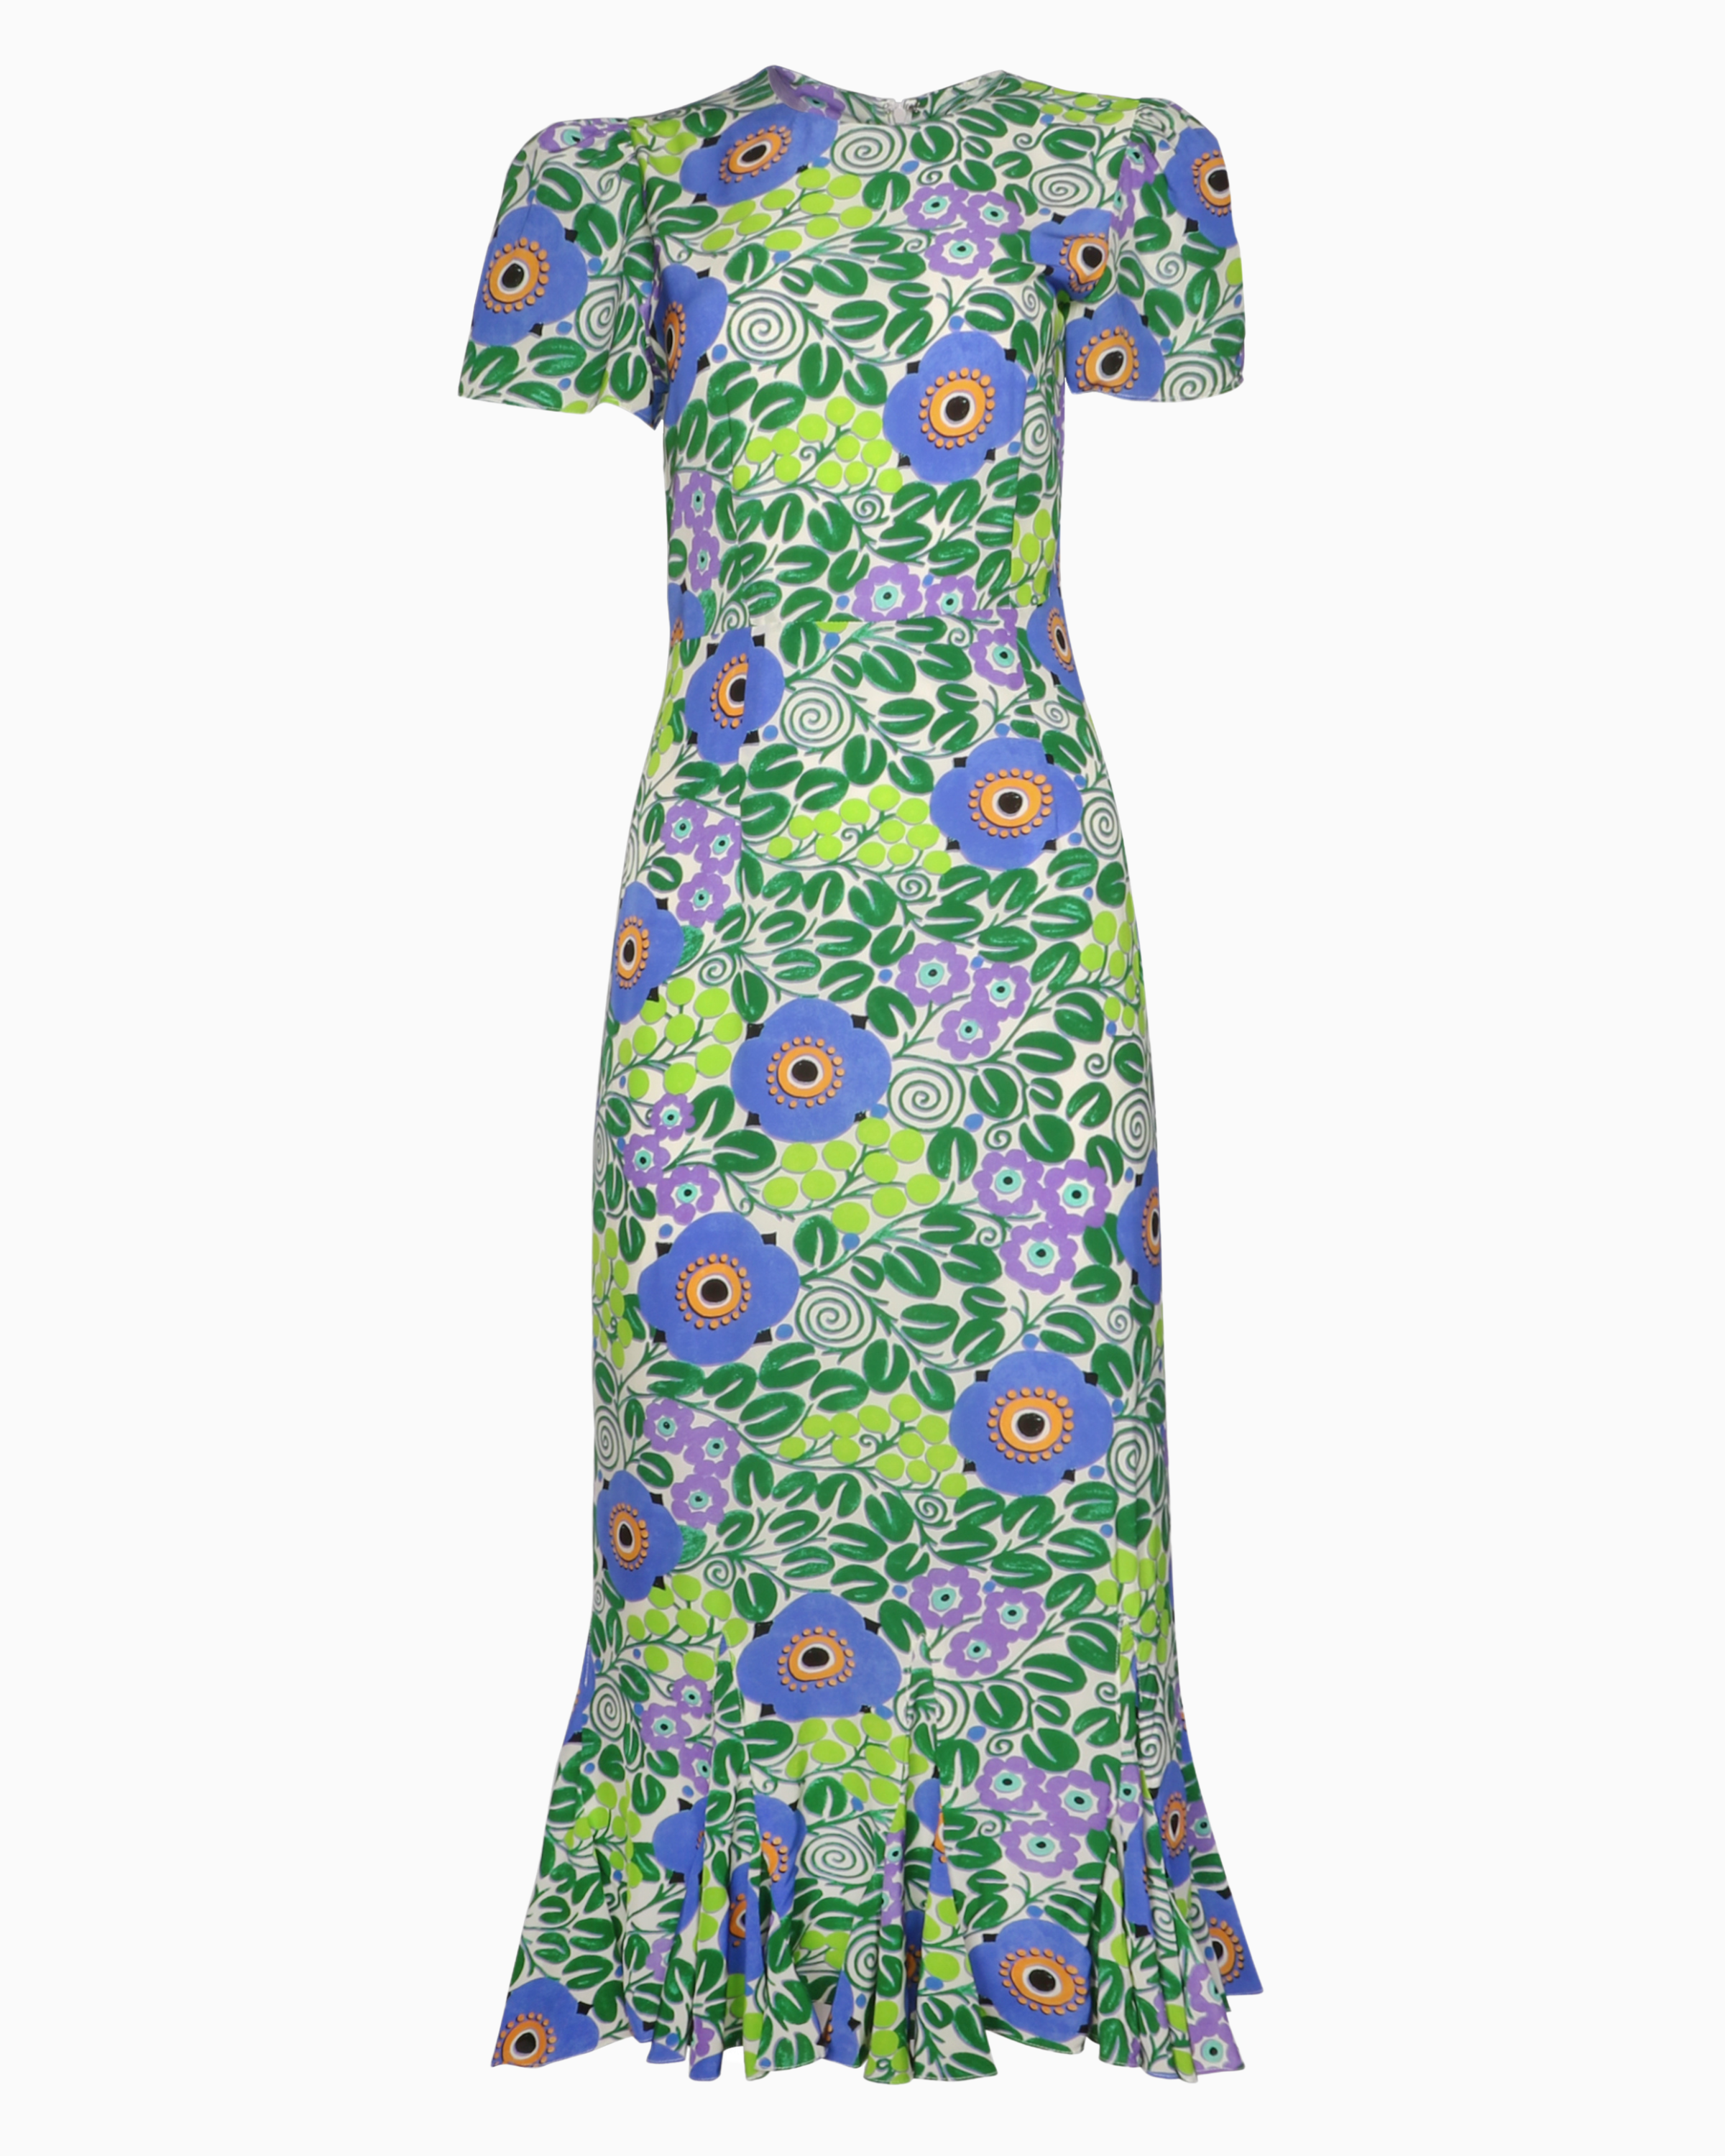 Rhode Lulani Dress in Wisteria Blossom